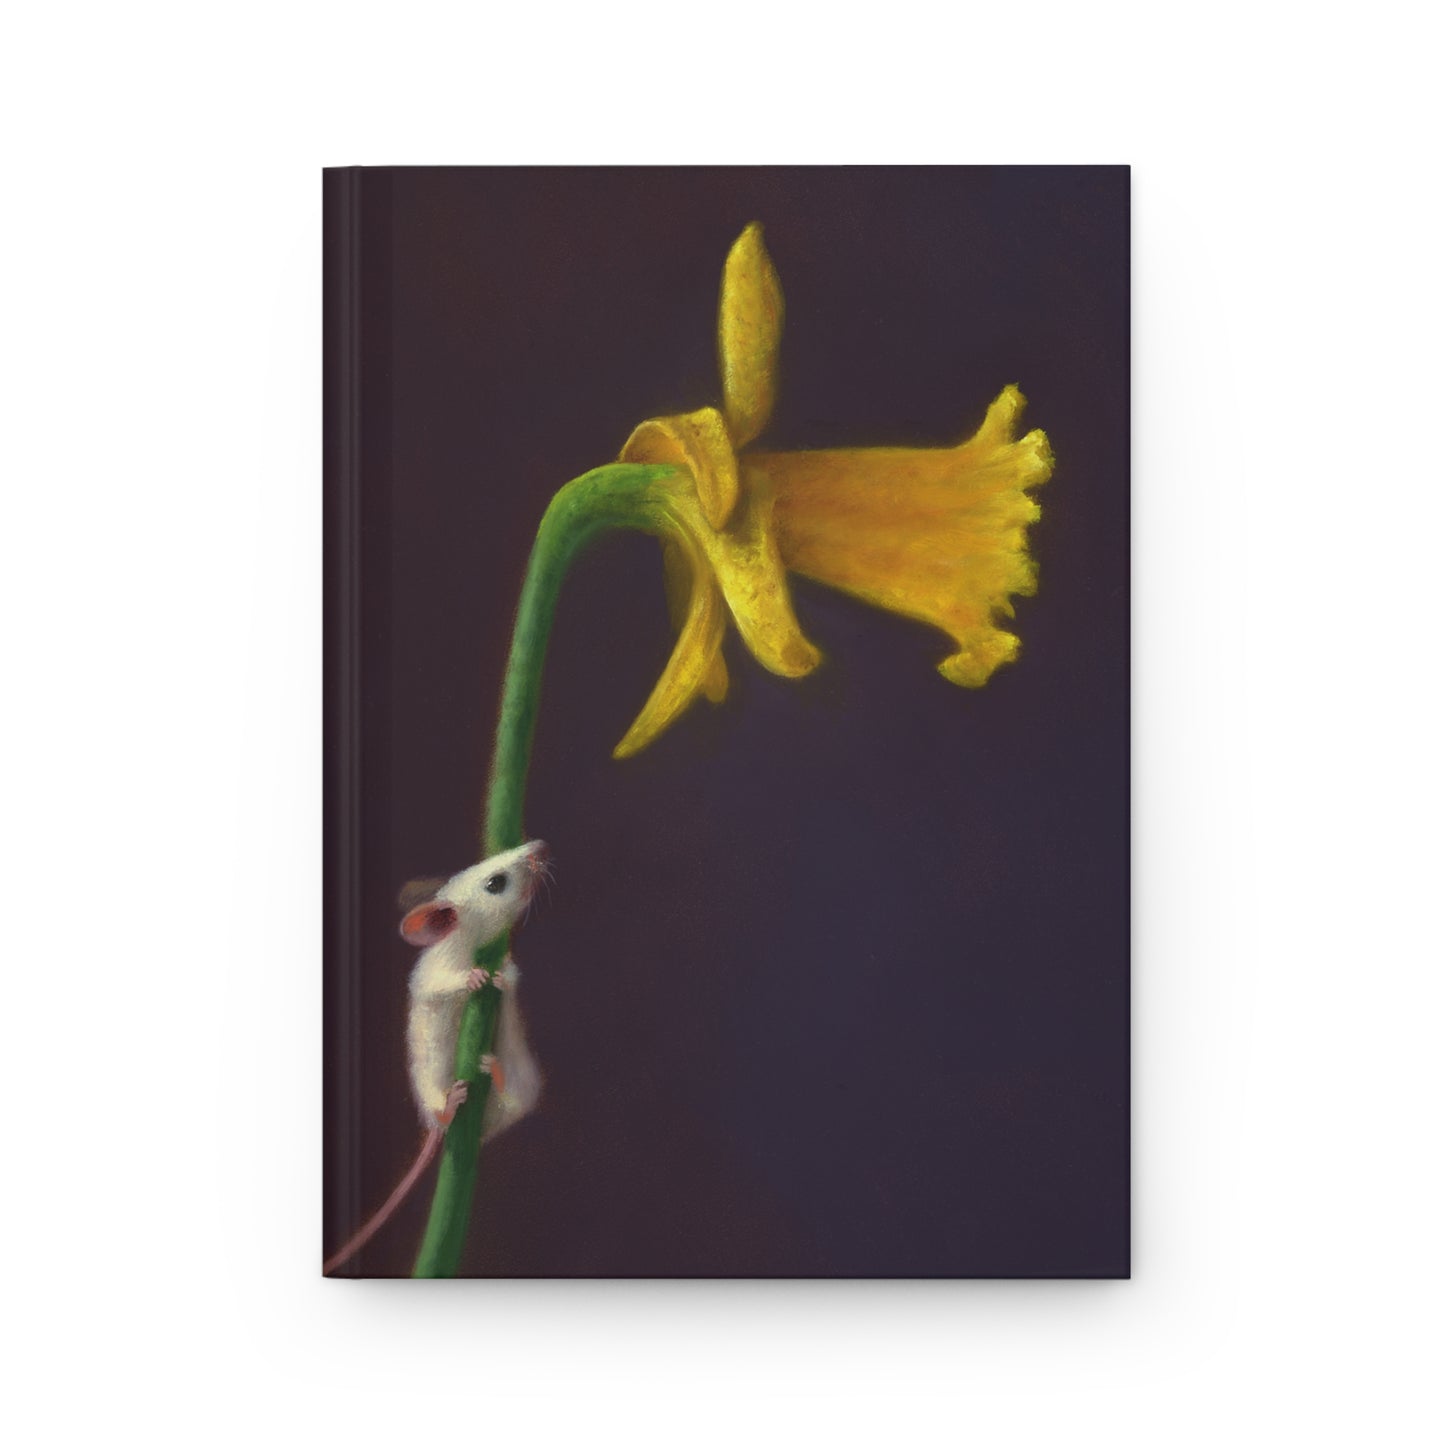 Stuart Dunkel: "Curious Yellow" -  Hardcover Journal